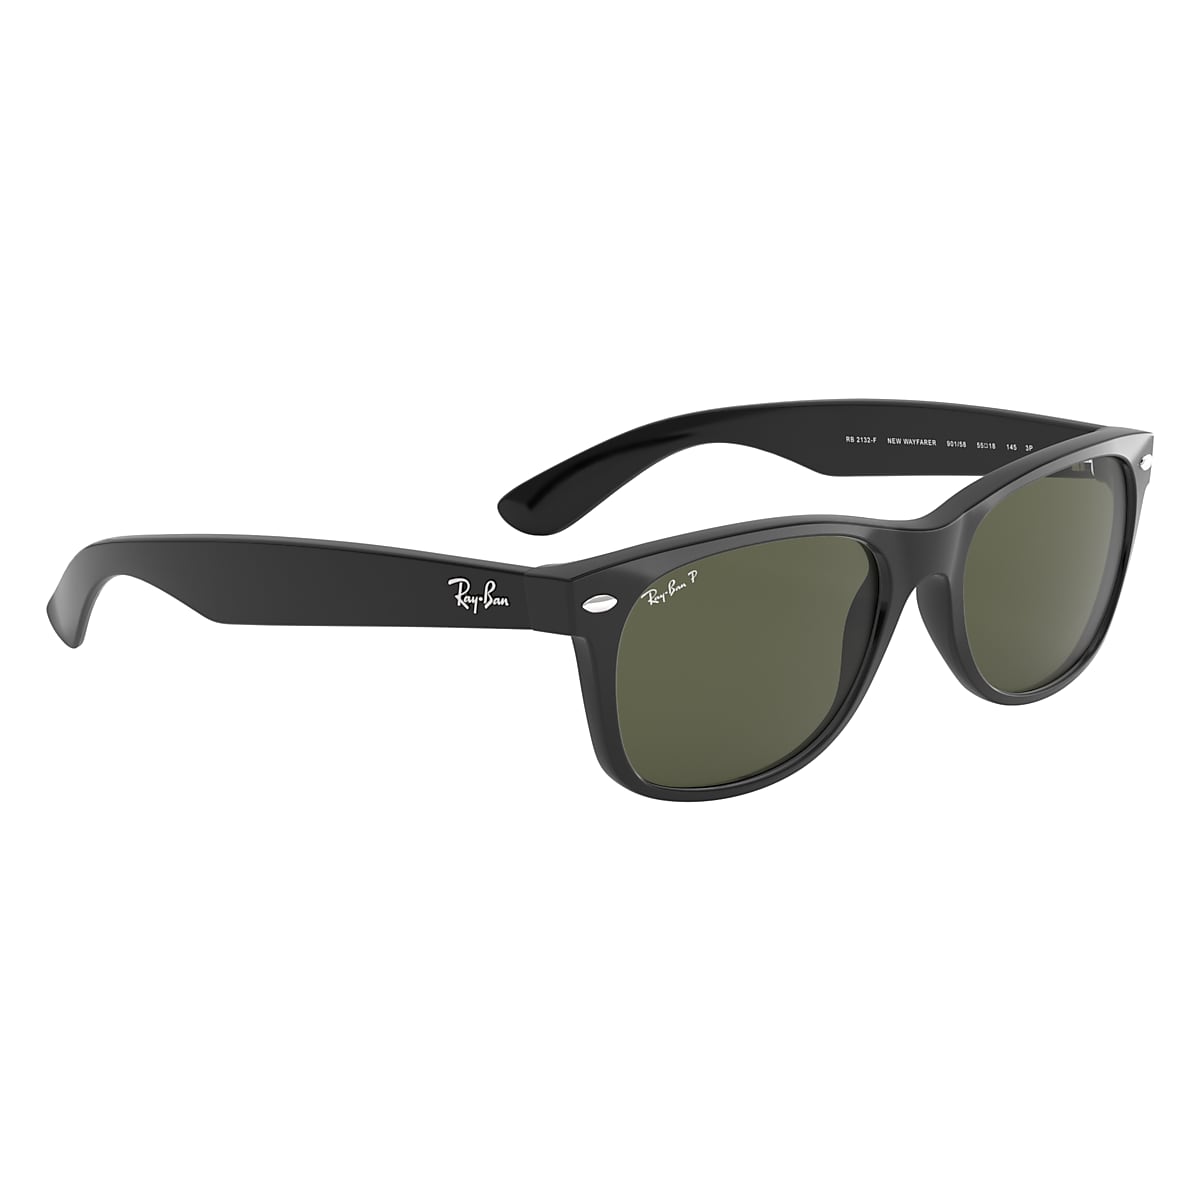 Ray-Ban New Wayfarer Classic Sunglasses Black Frame Green Lenses Polarized  55-18